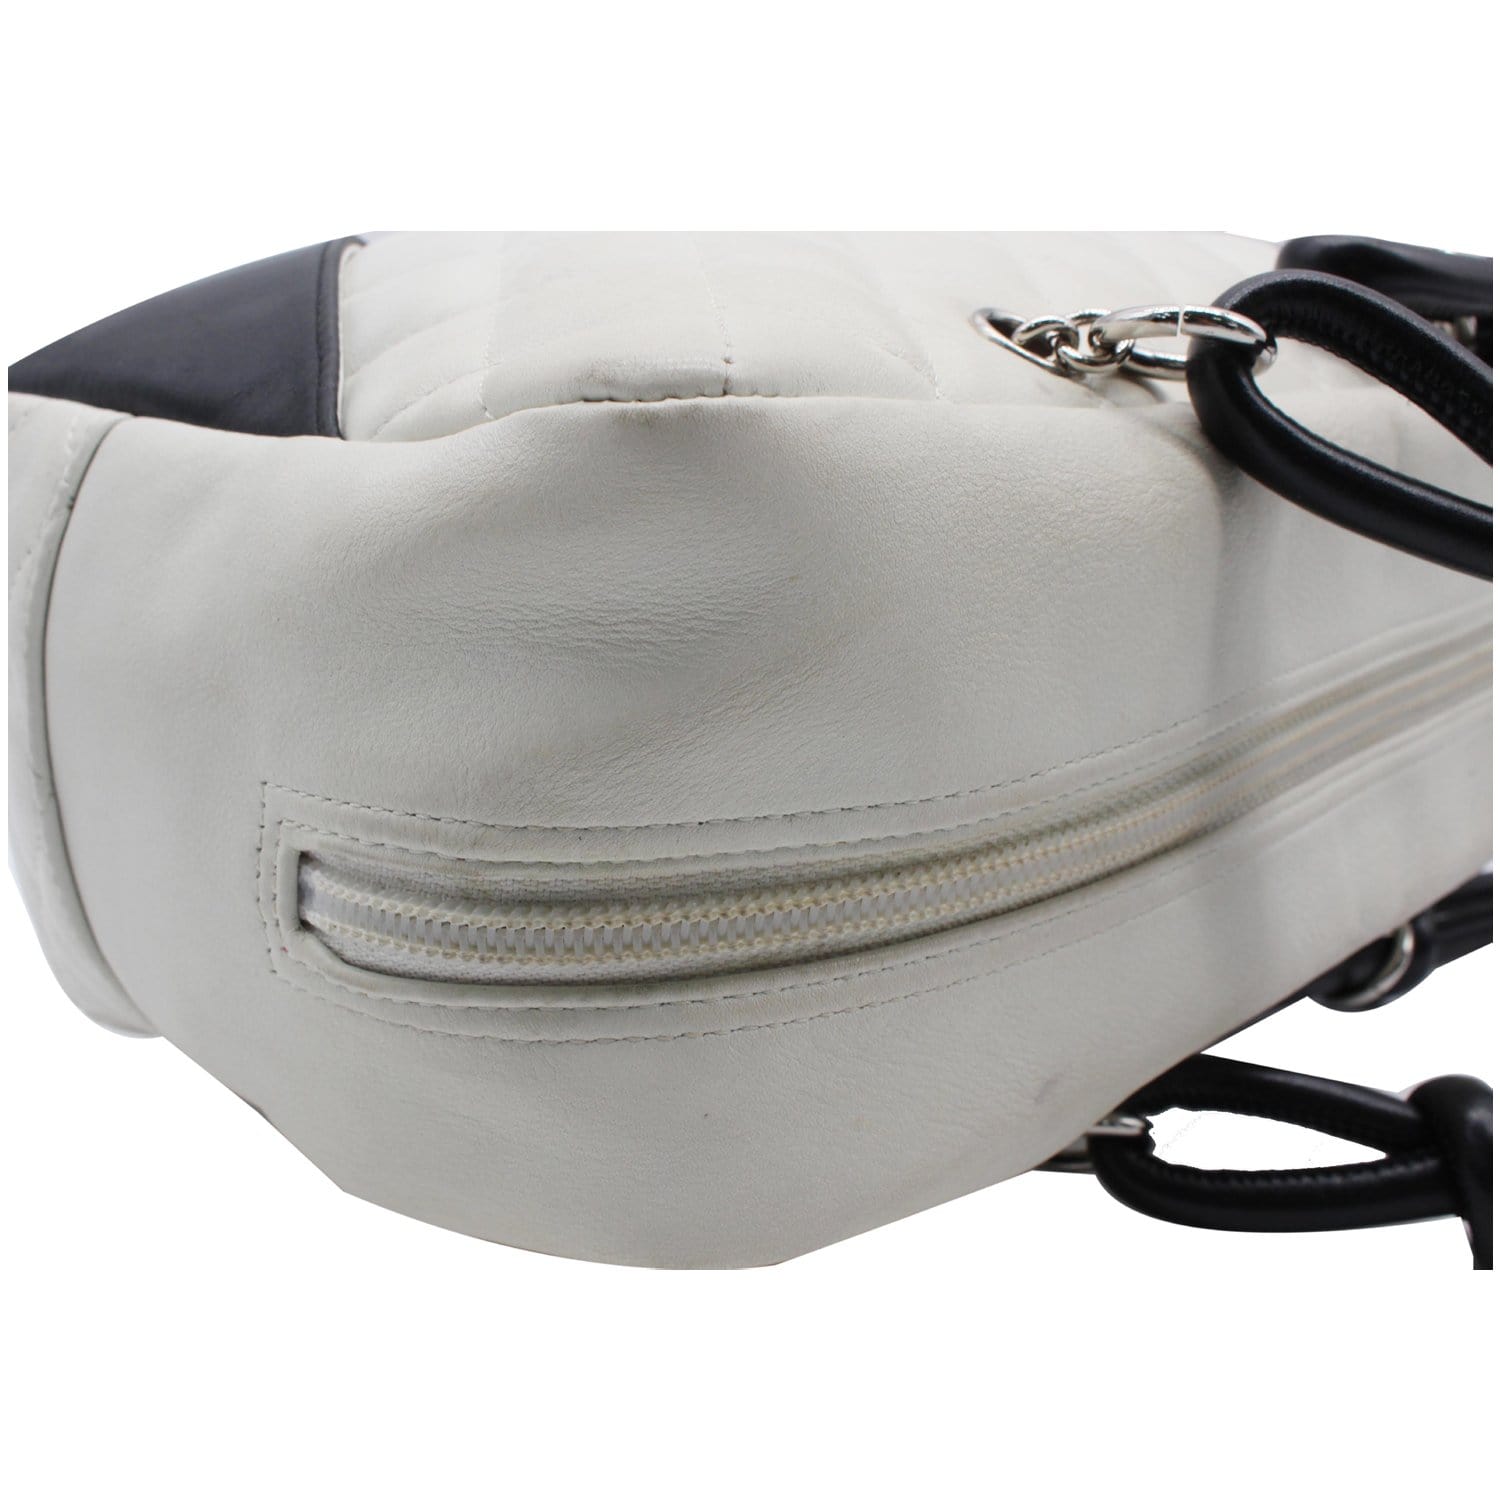 CHANEL Cambon Ligne Bowler Bag in White